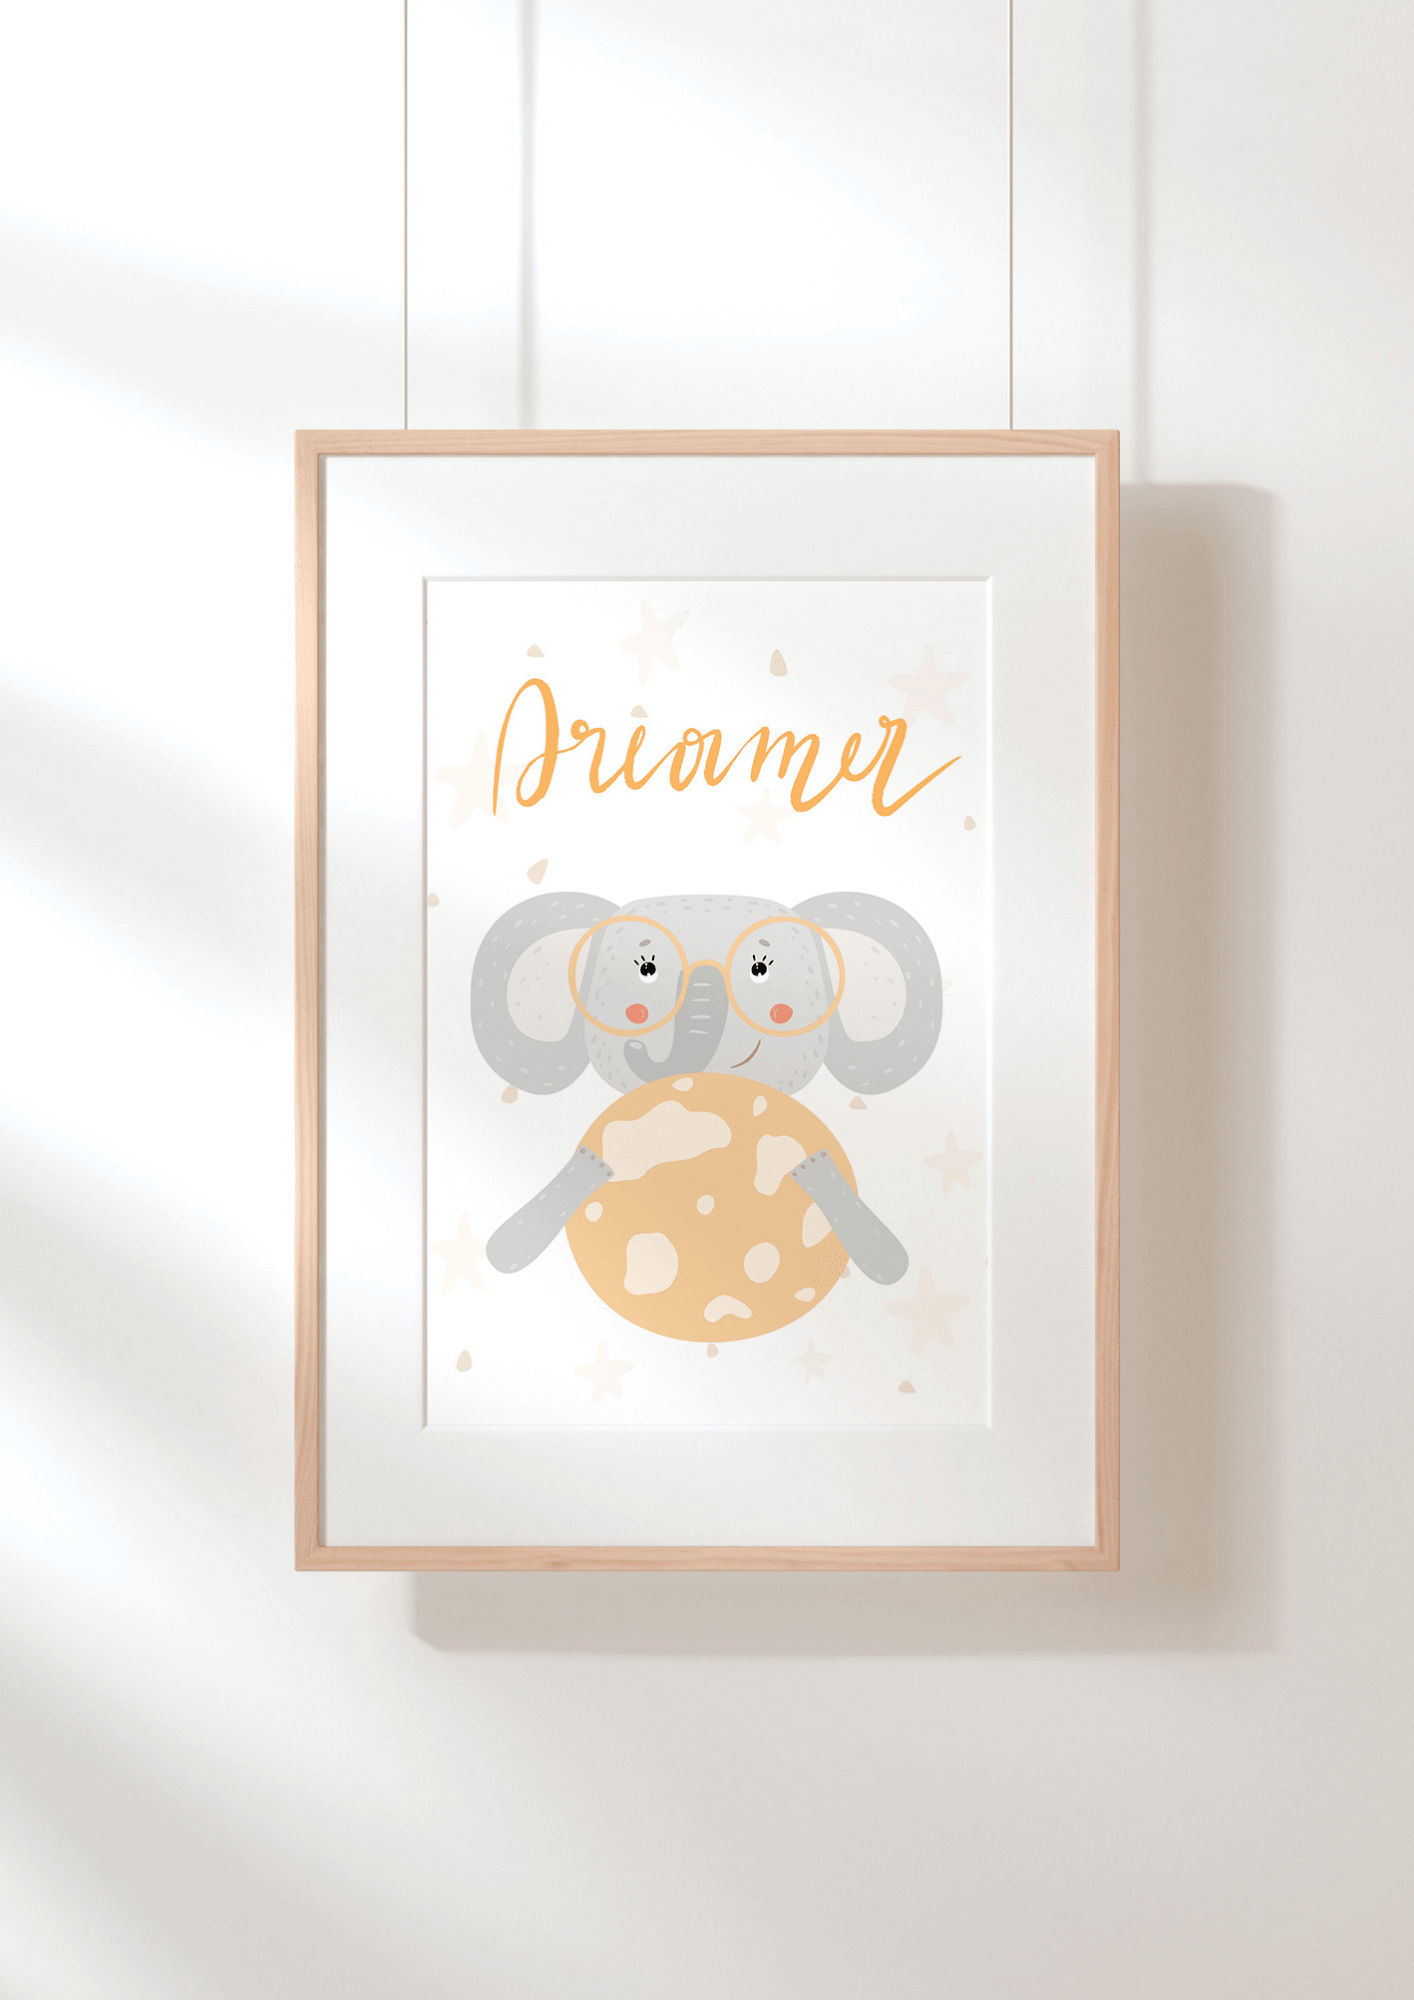 Elephant Dreamer - The Ditzy Dodo